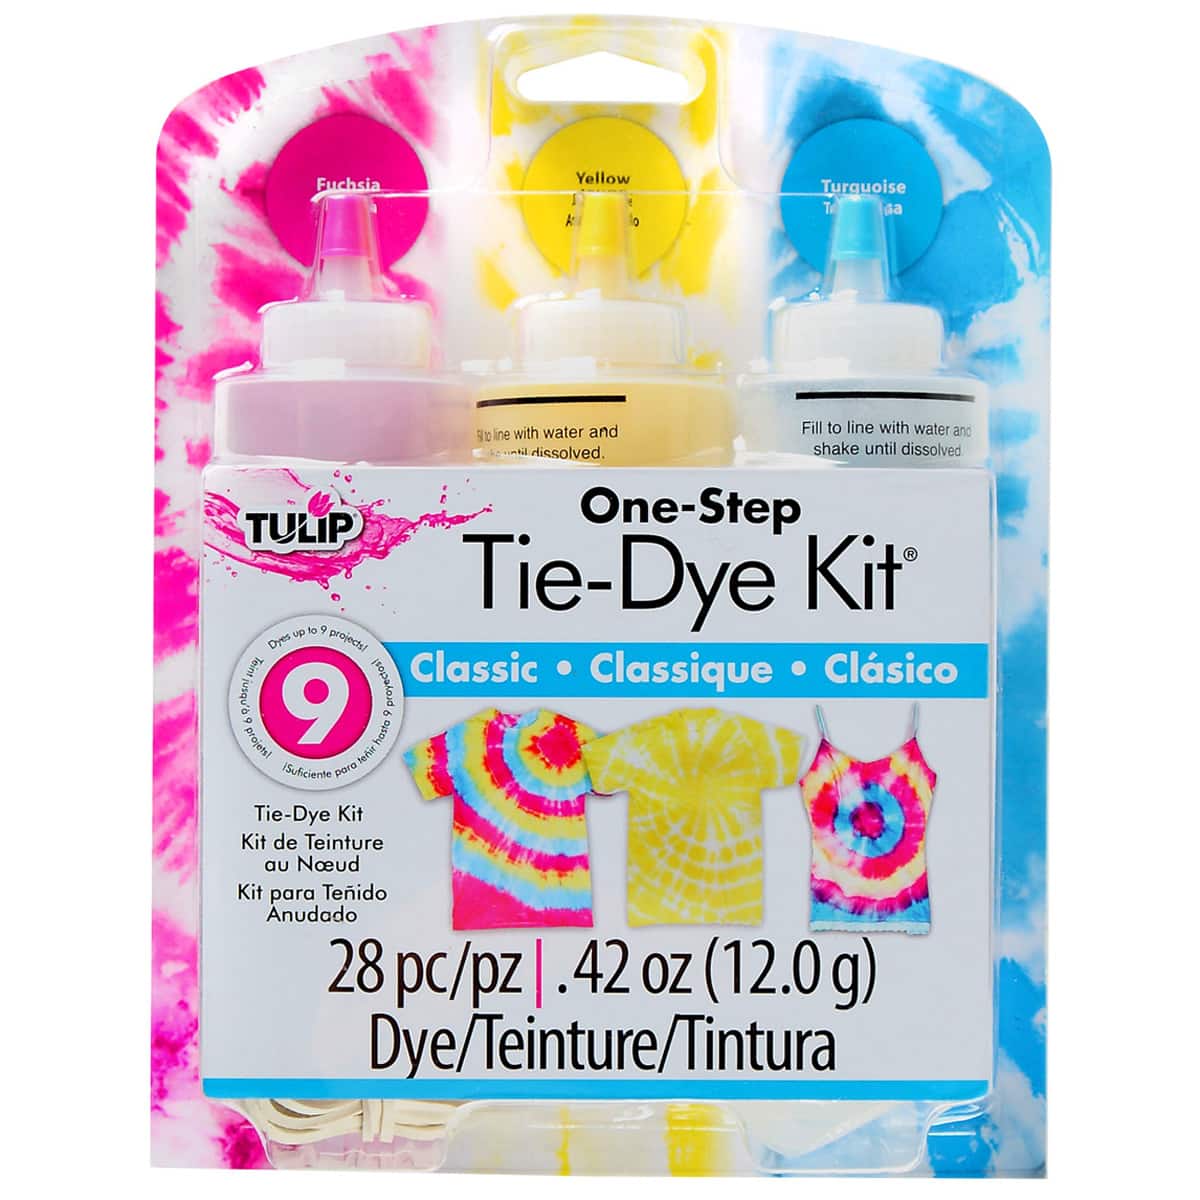 Tie-Dye Kits for sale in Wilton, Connecticut